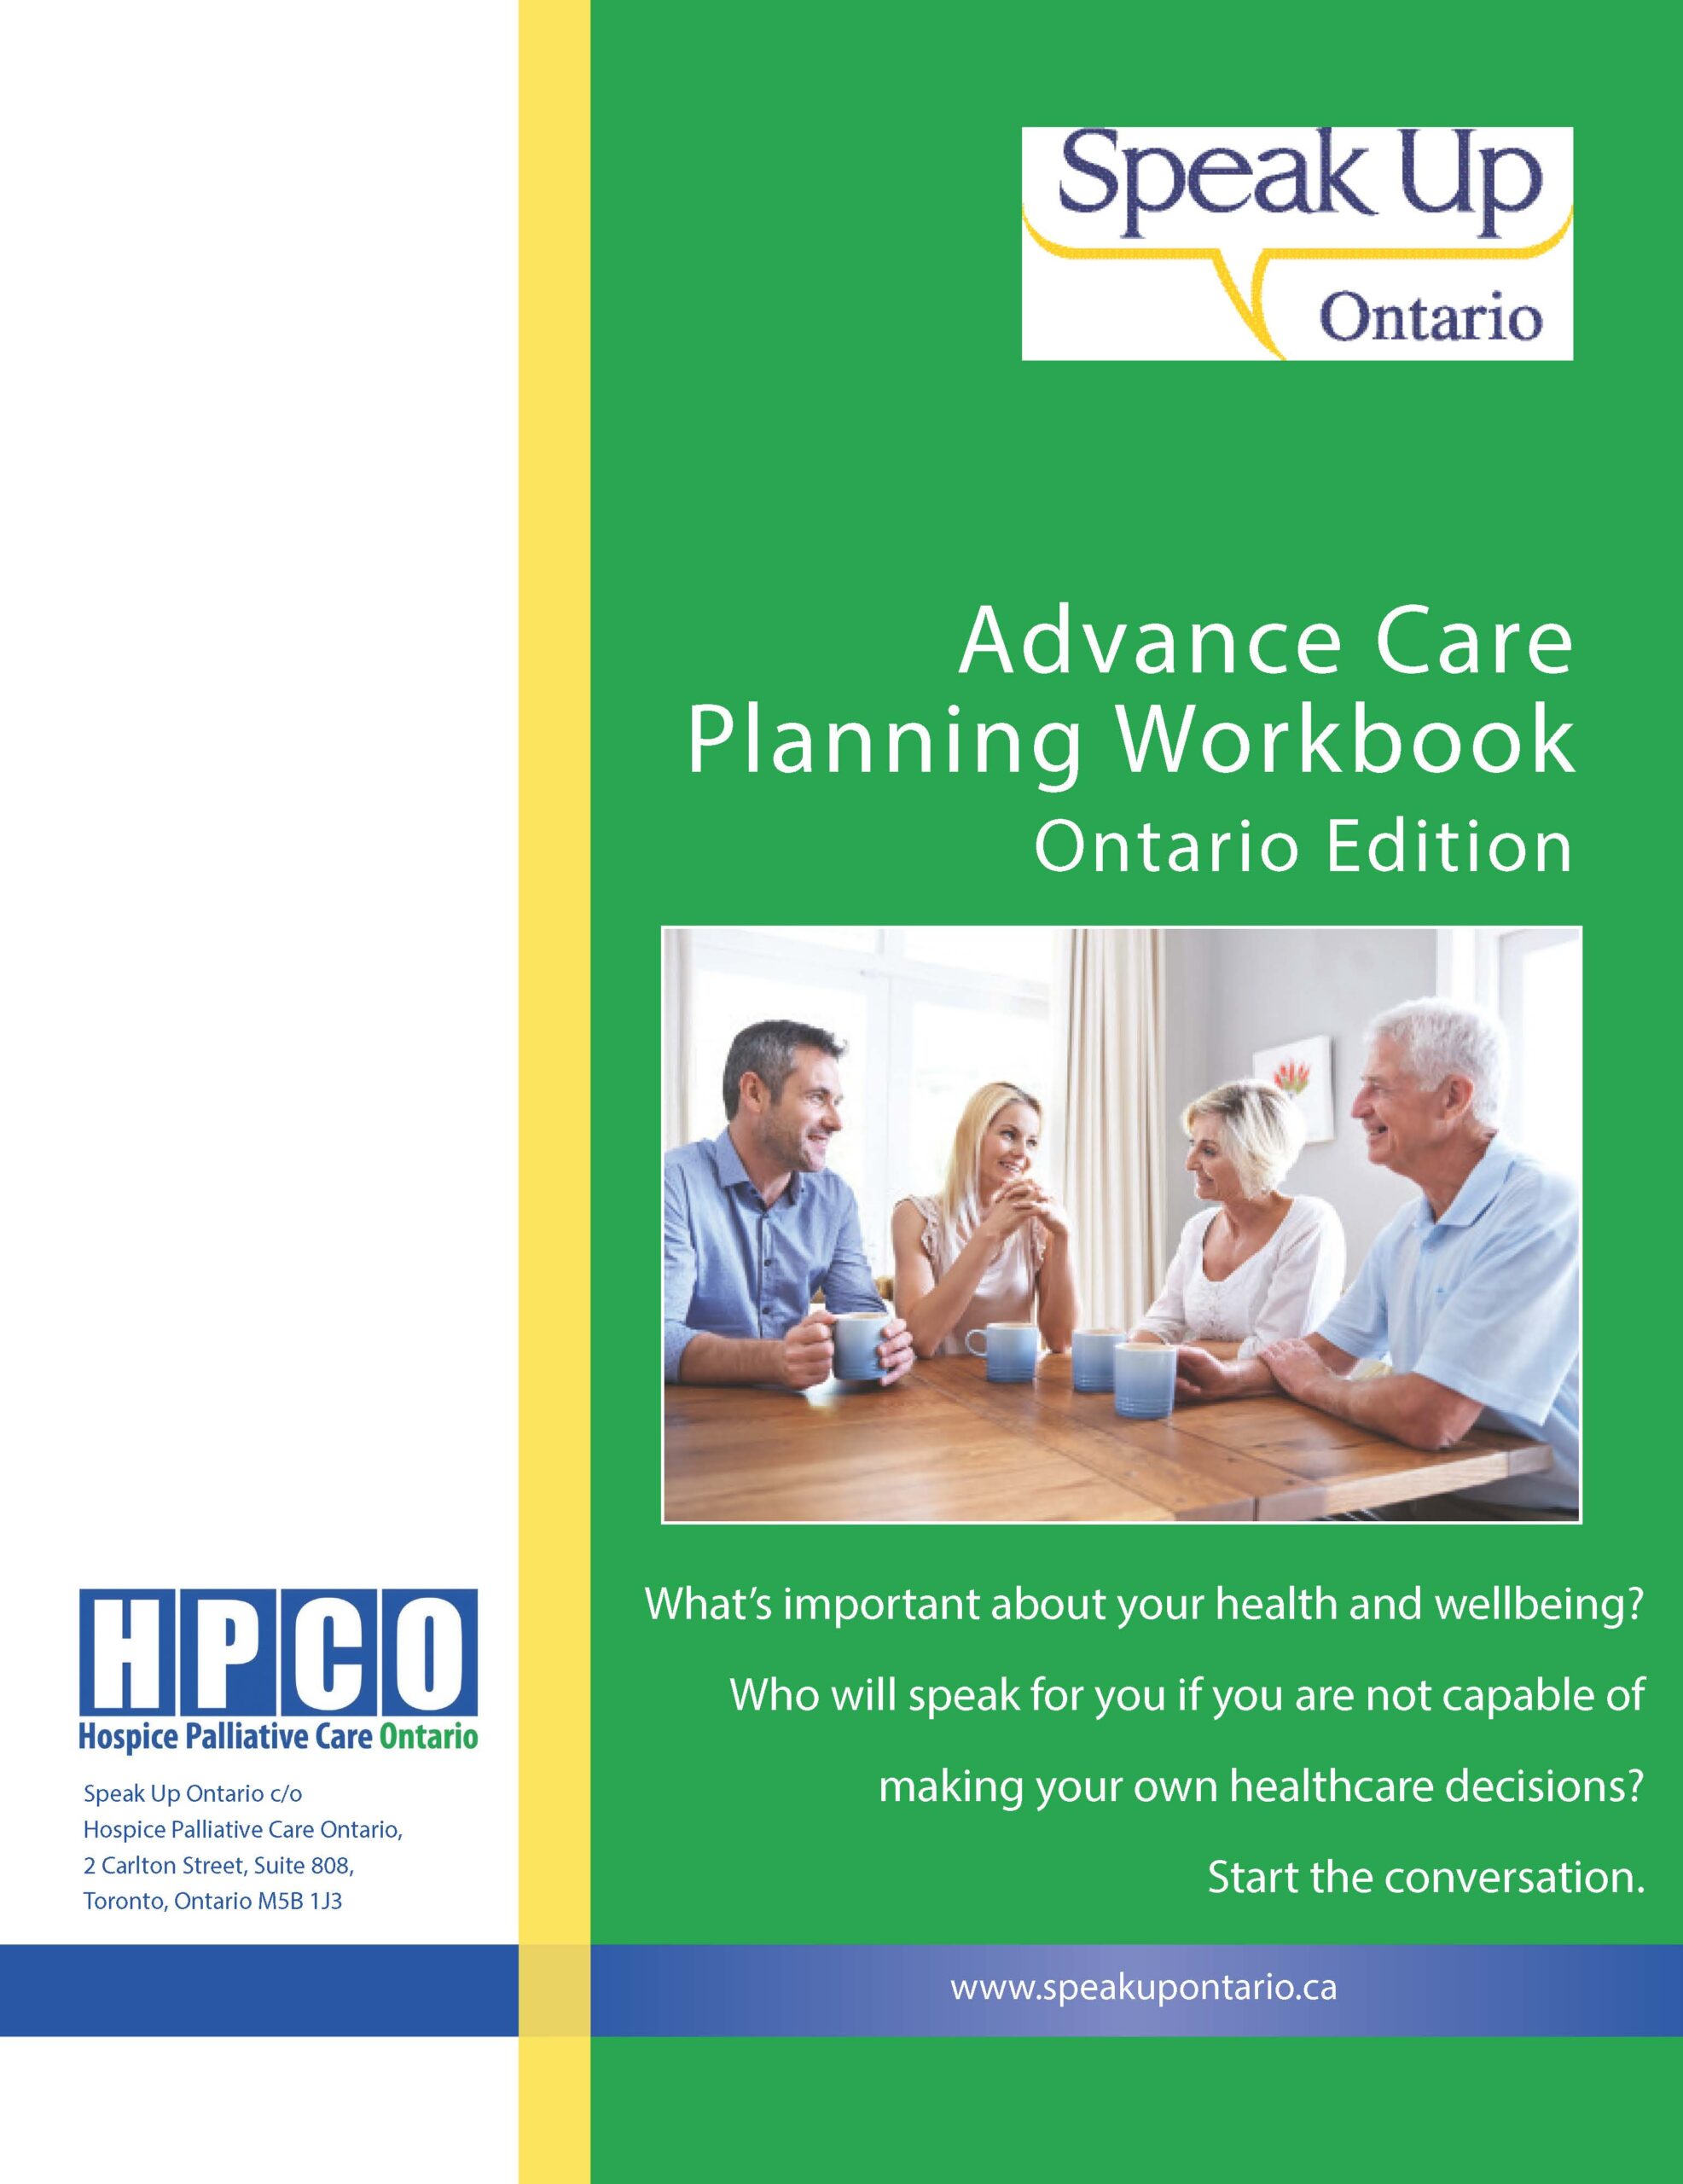 Advance Care Planning workbook